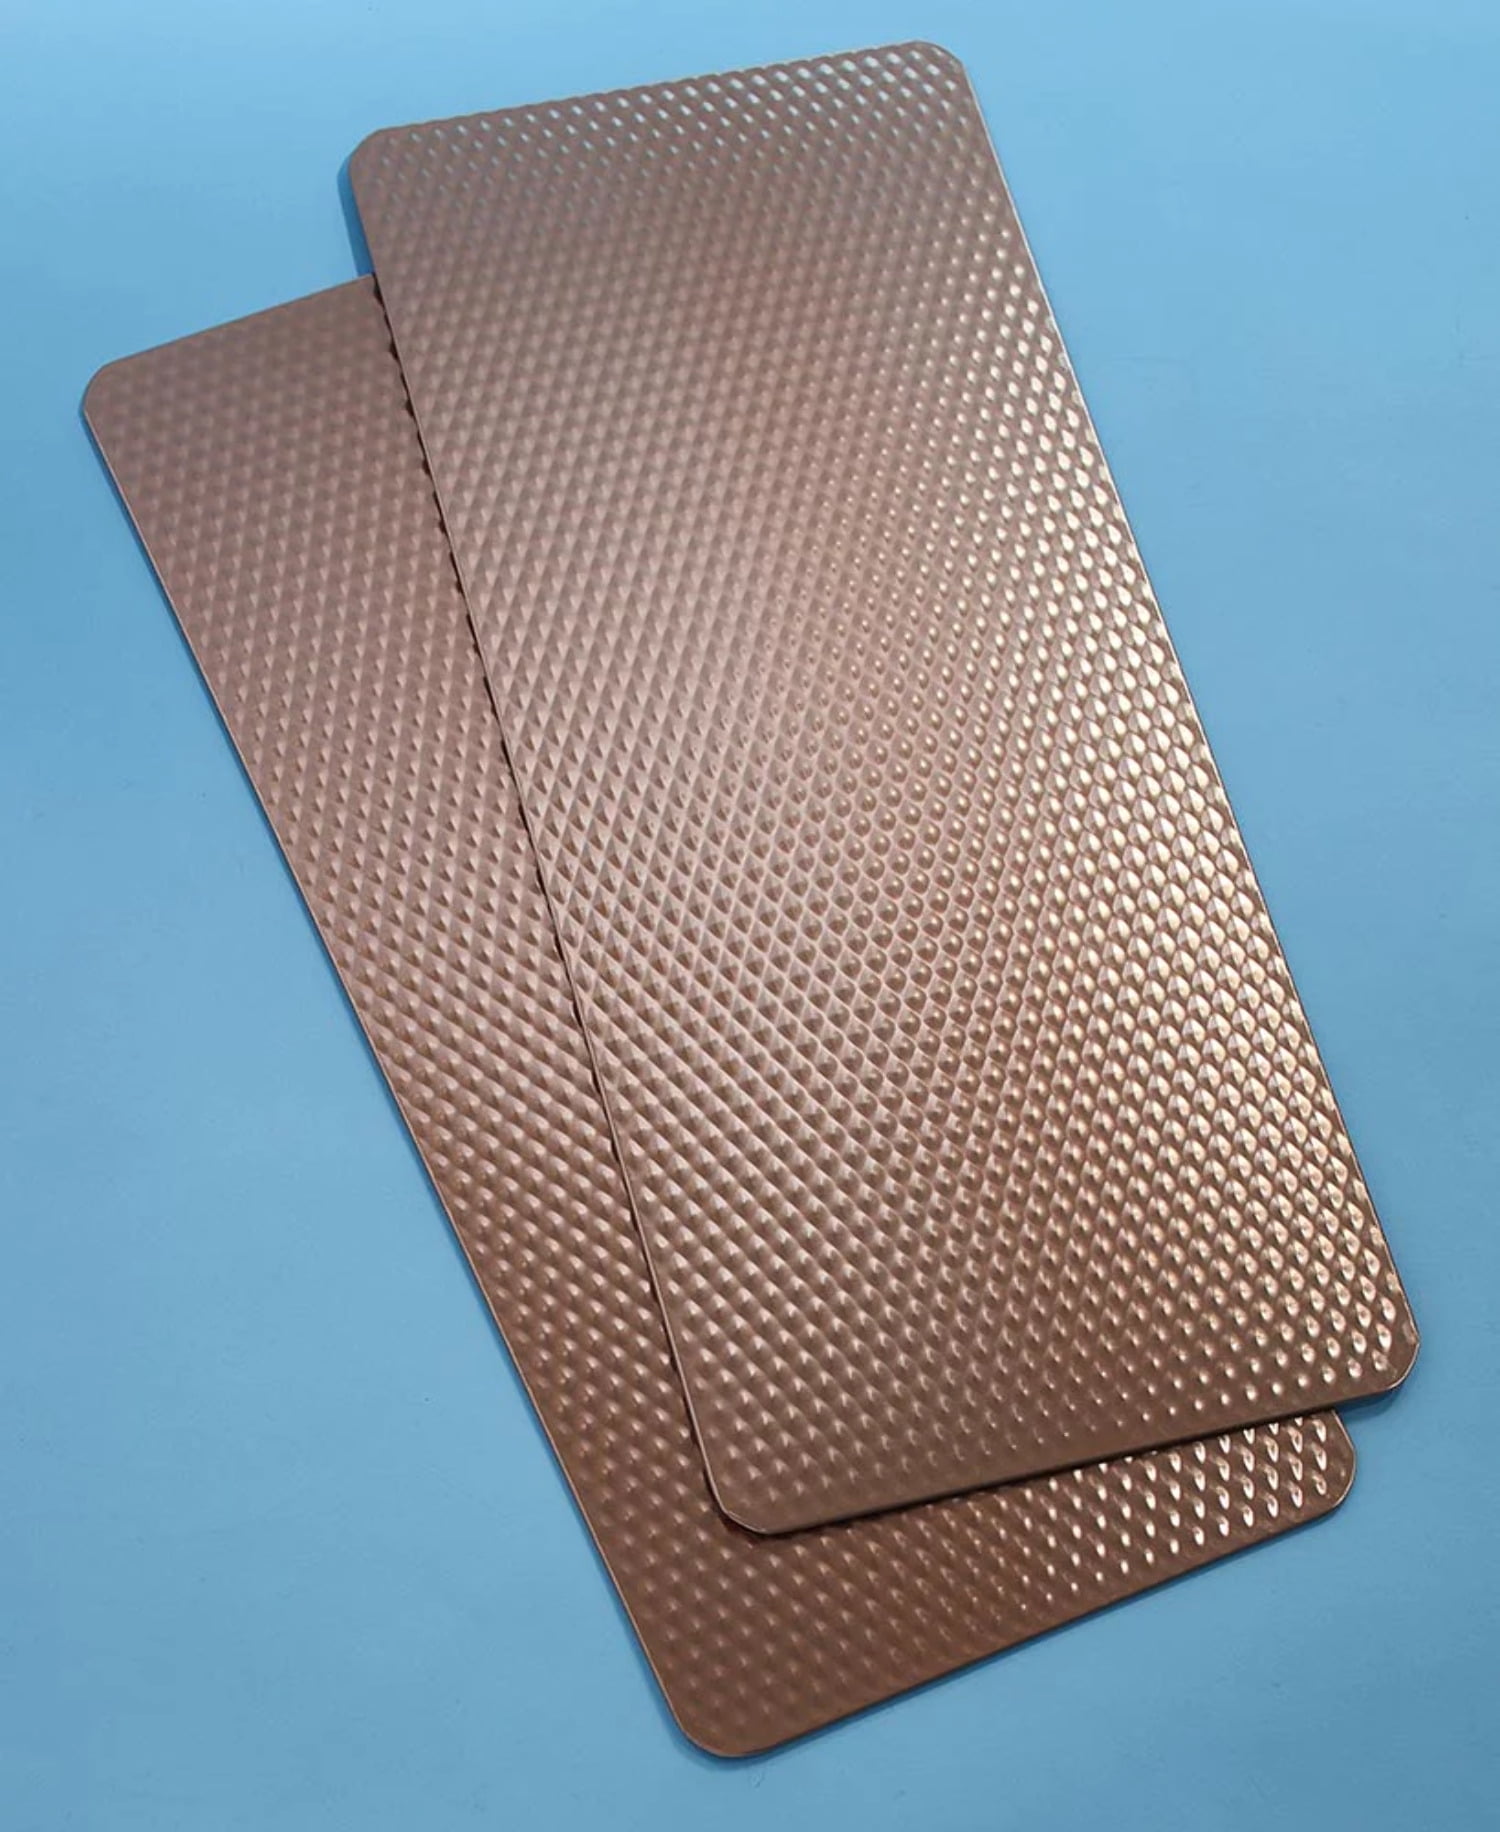 Insulated Countertop Protector Mats / Metal Trivets - Copper